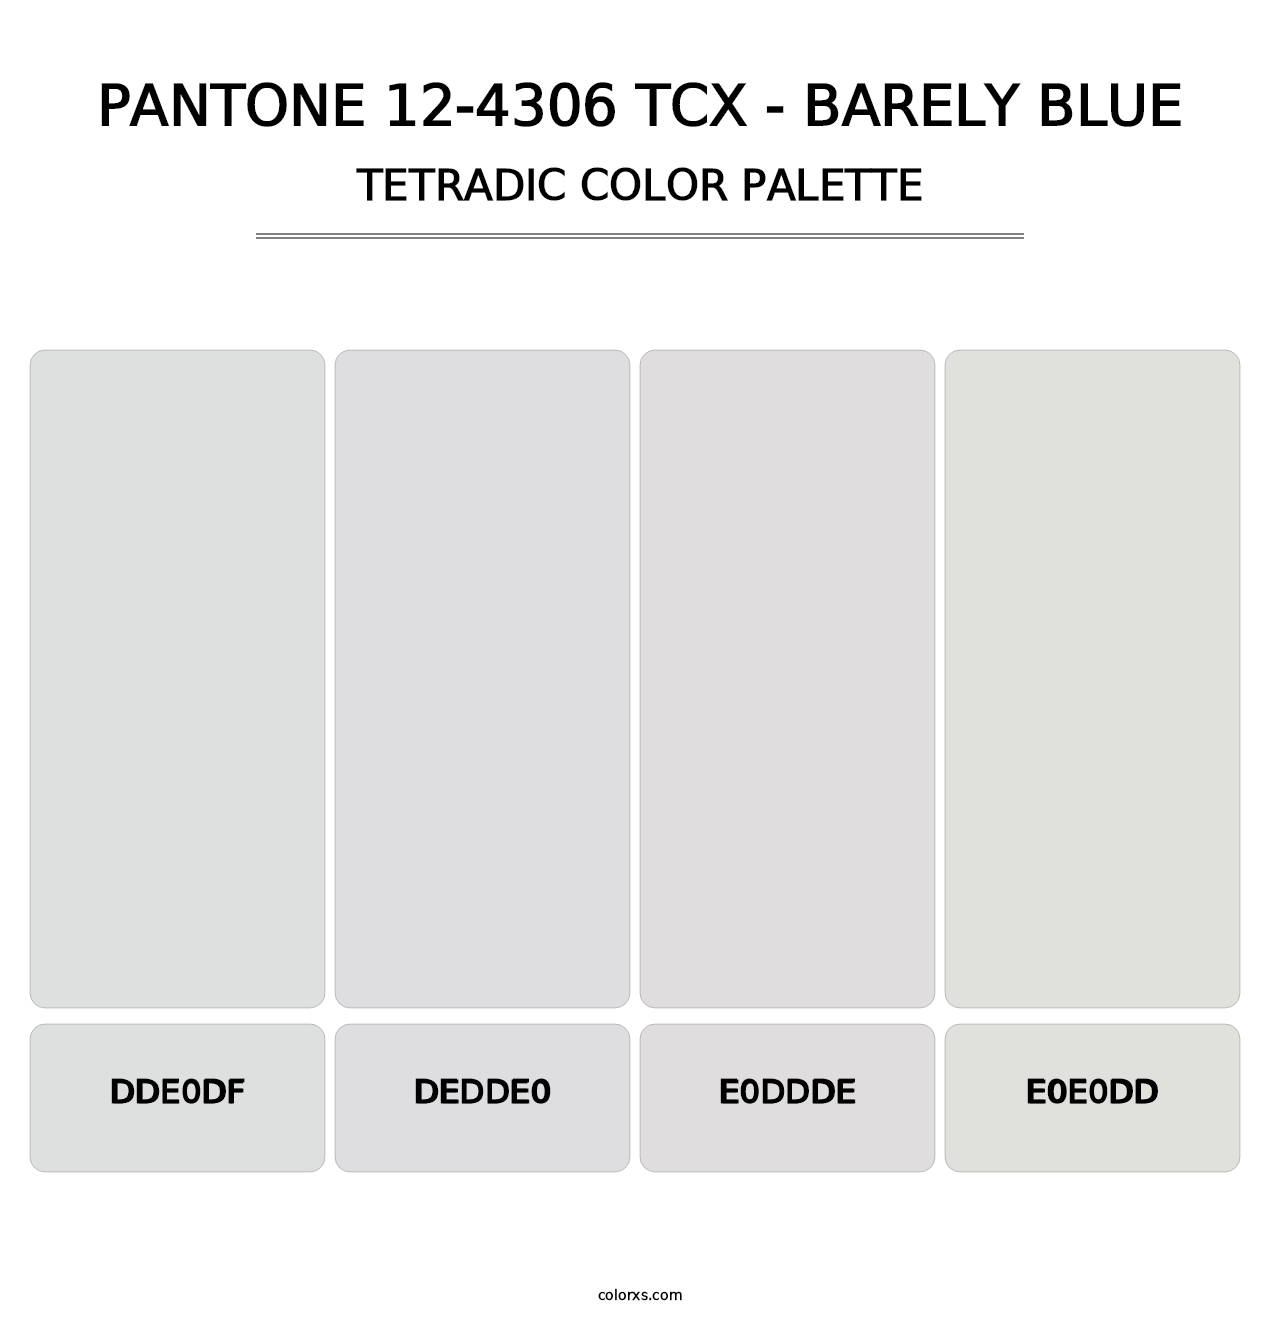 PANTONE 12-4306 TCX - Barely Blue - Tetradic Color Palette